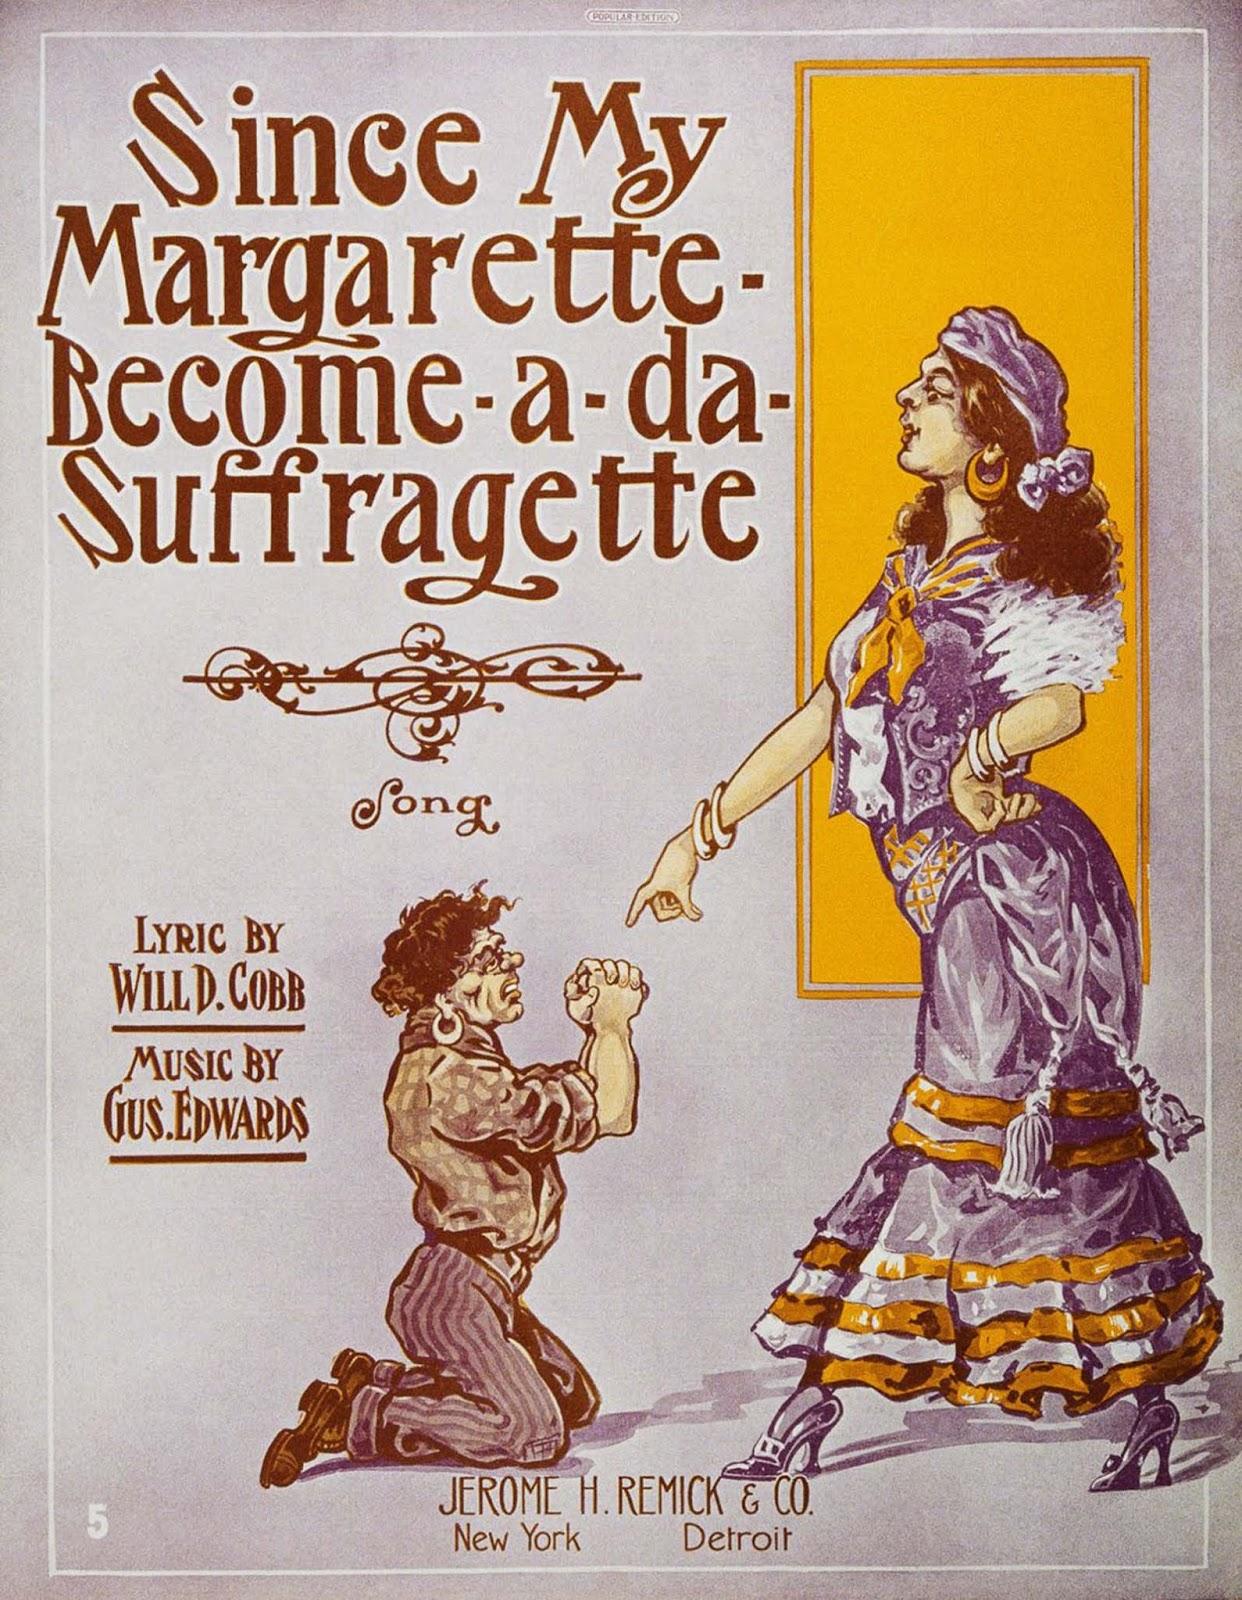 Propagande de la campagne contre le suffrage des femmes, 1900-1913